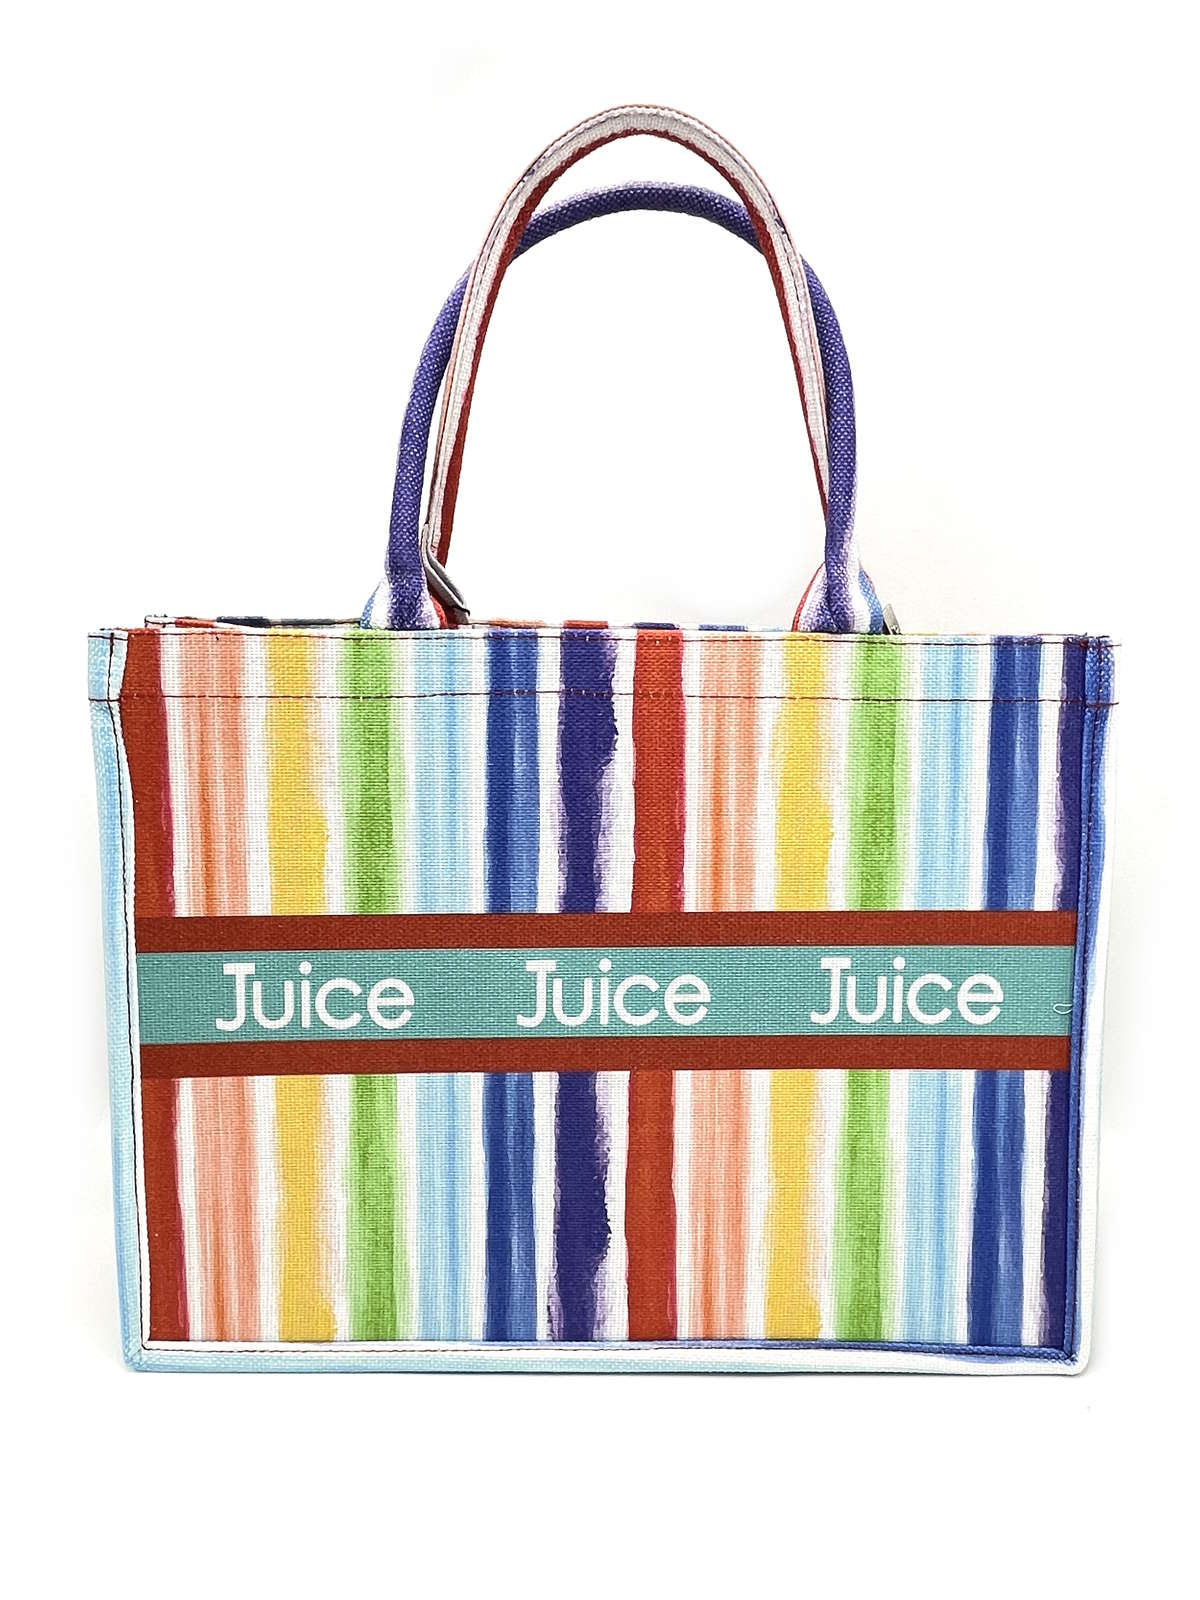 Brand Juice, Shopping bag, art. 231055.155